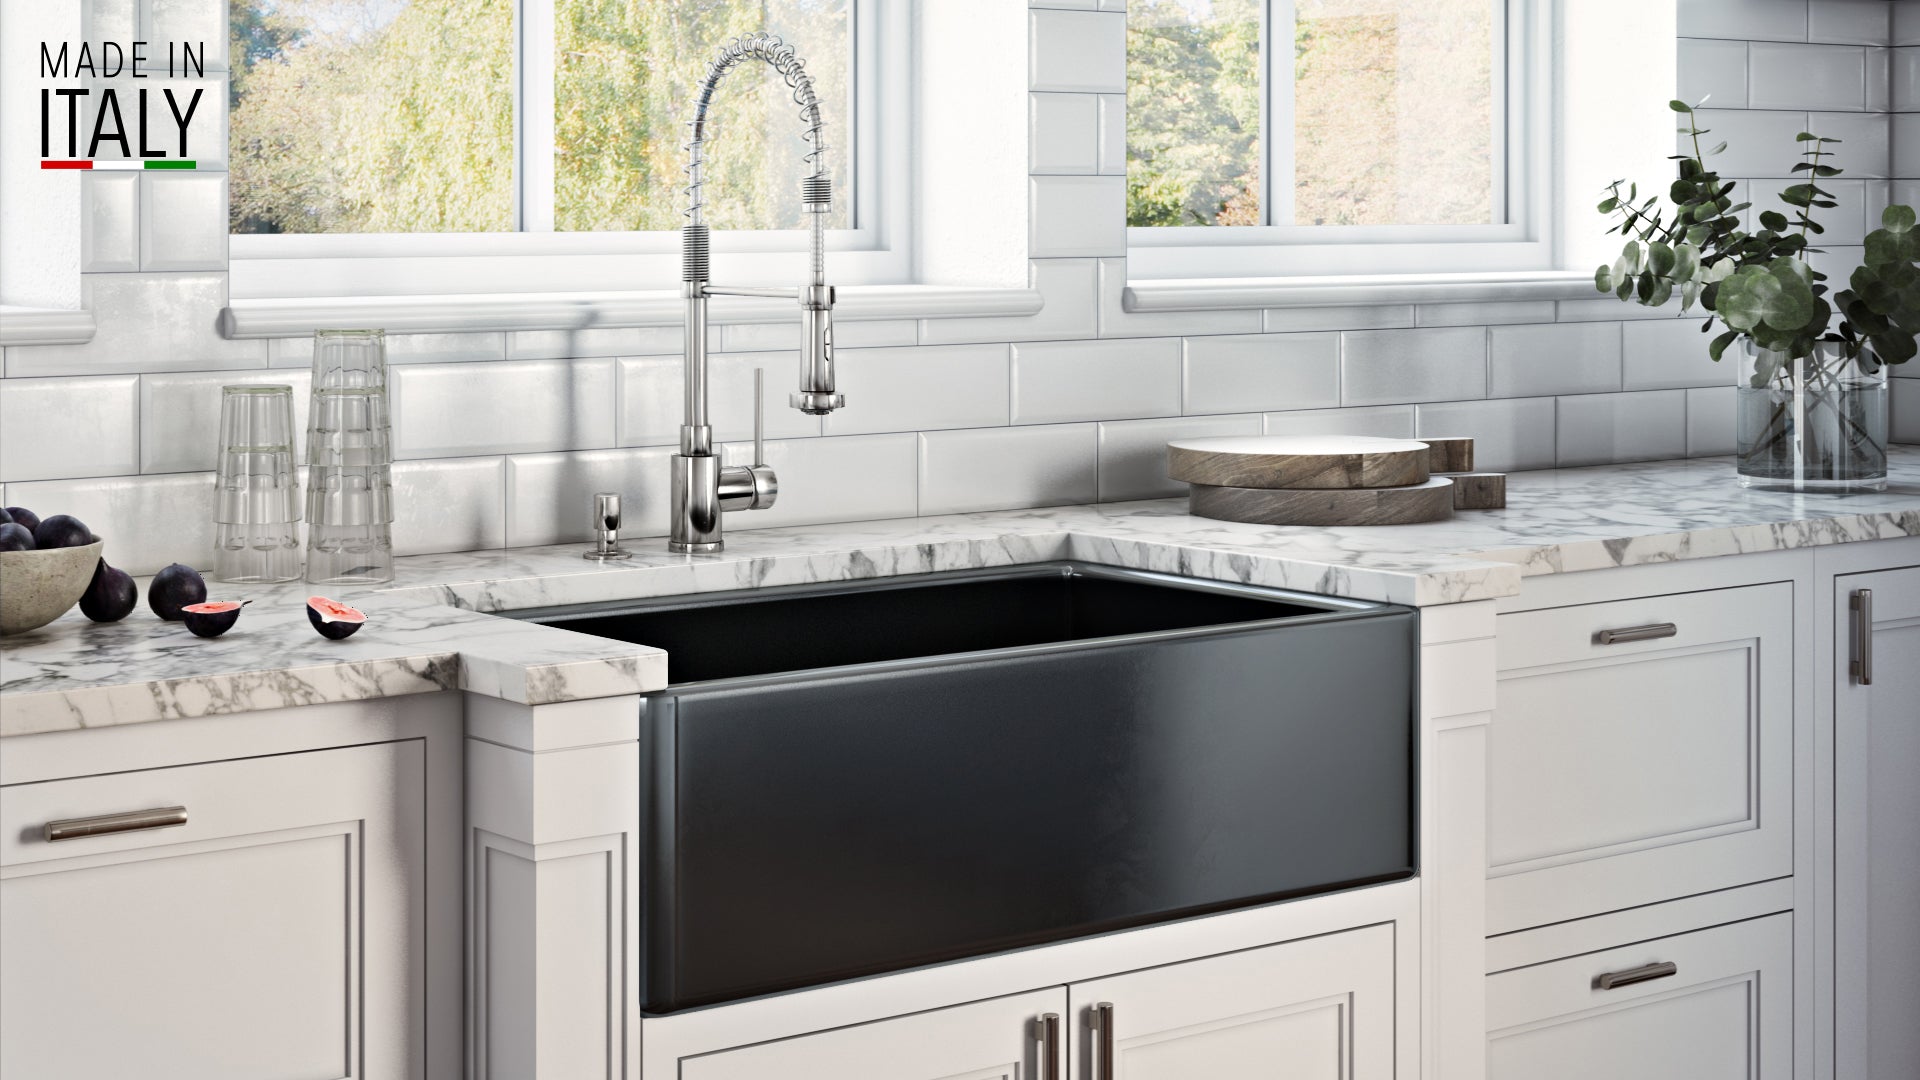 33 x 20 inch Fireclay Reversible Farmhouse Apron-Front Kitchen Sink Single Bowl – Gloss Black